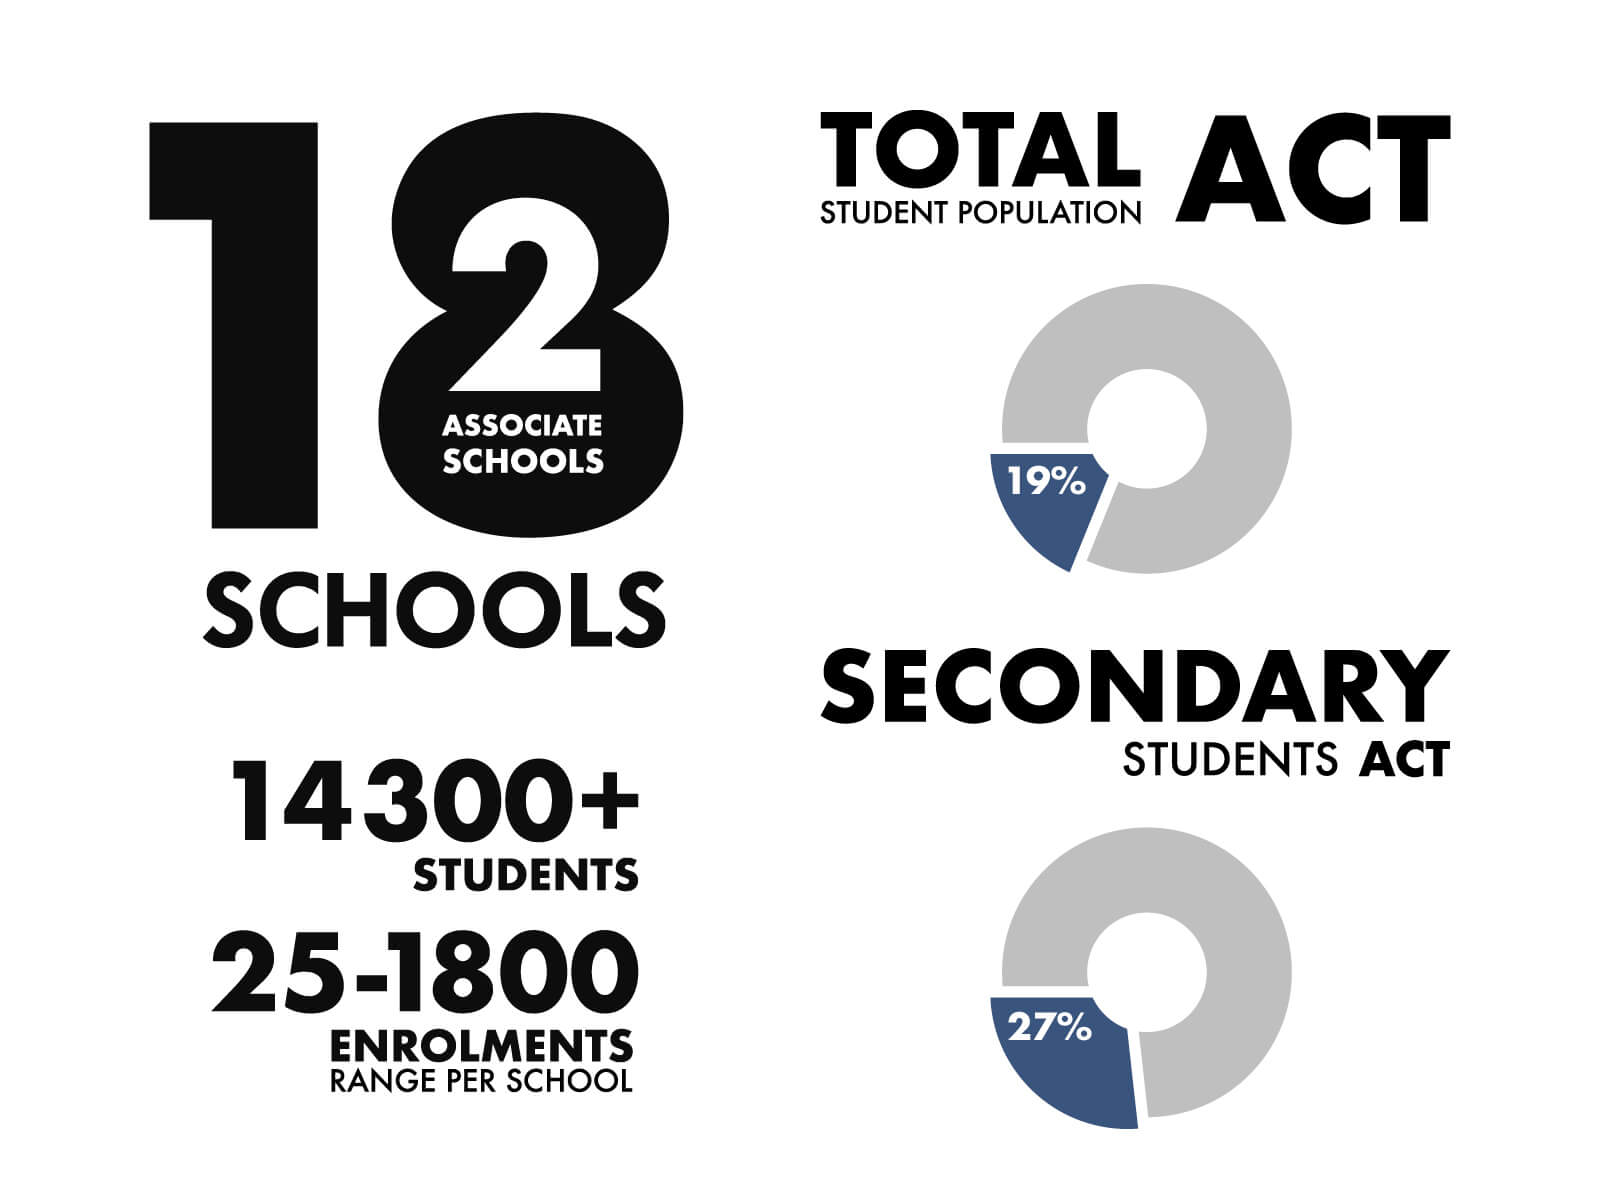 Infographic: 18 Member Schools, 2 Associate Member Schools, 14300+ Students, 25-1800 Enrolments range per school, 19% of the total ACT student population, 27% Secondary Students in ACT